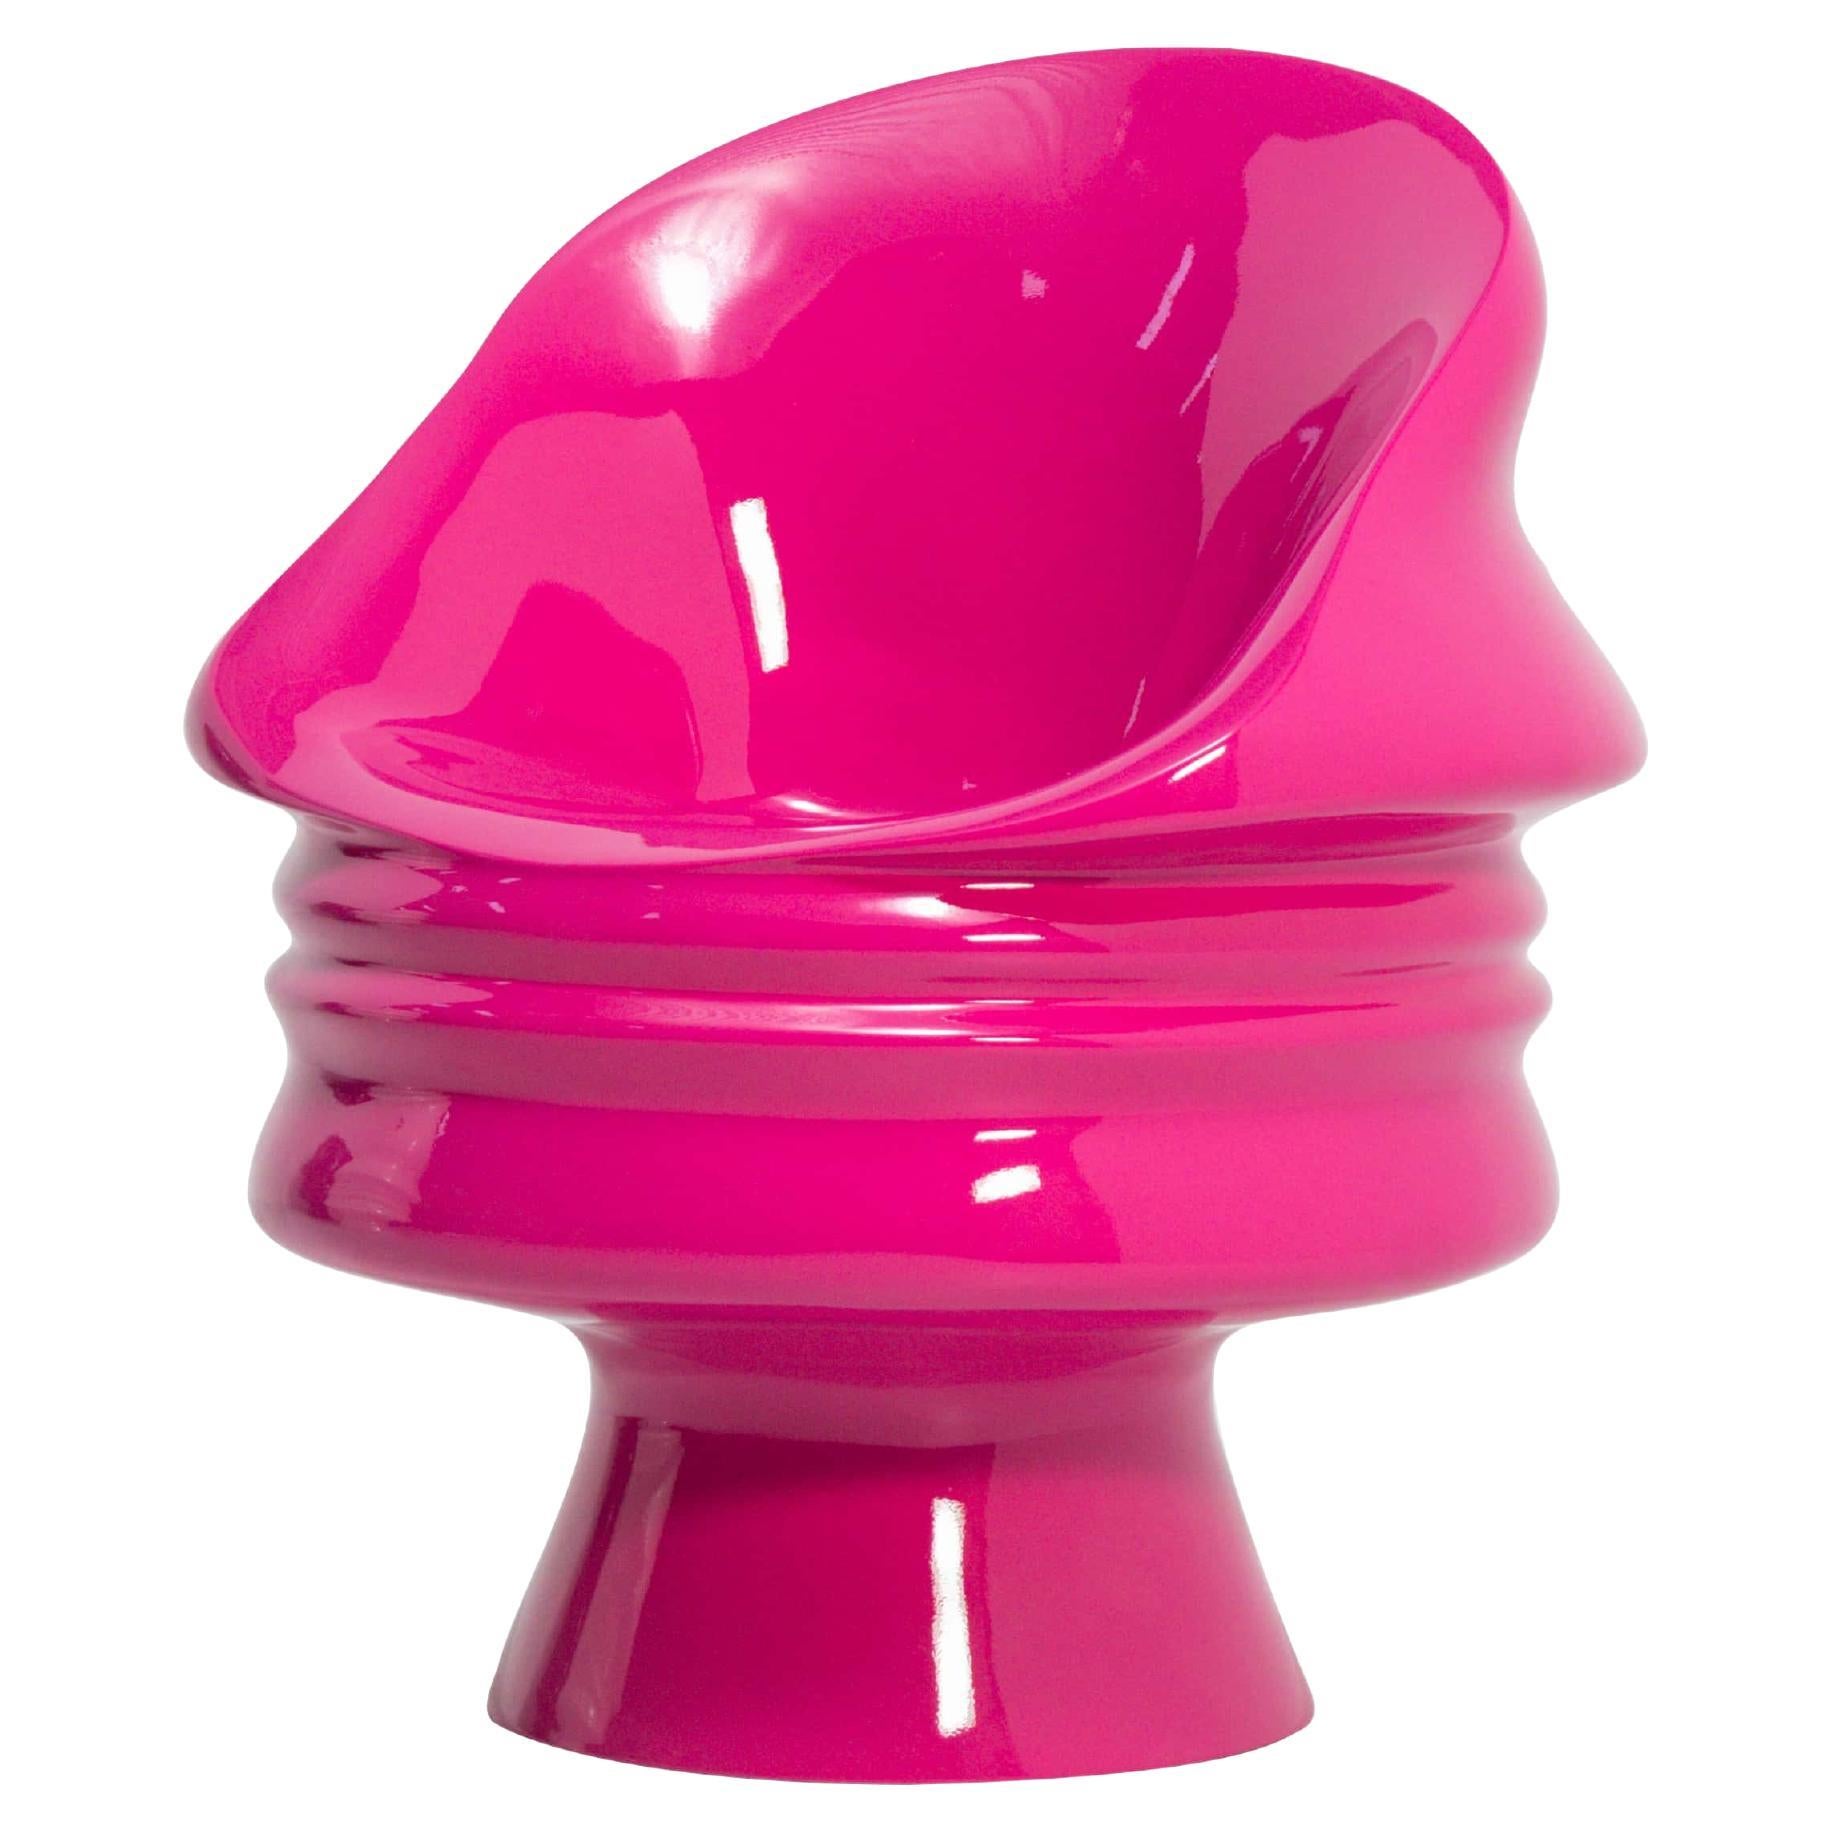 Ego Hot Pink Chair by Karim Rashid for Scarlet Splendor | auctionlab